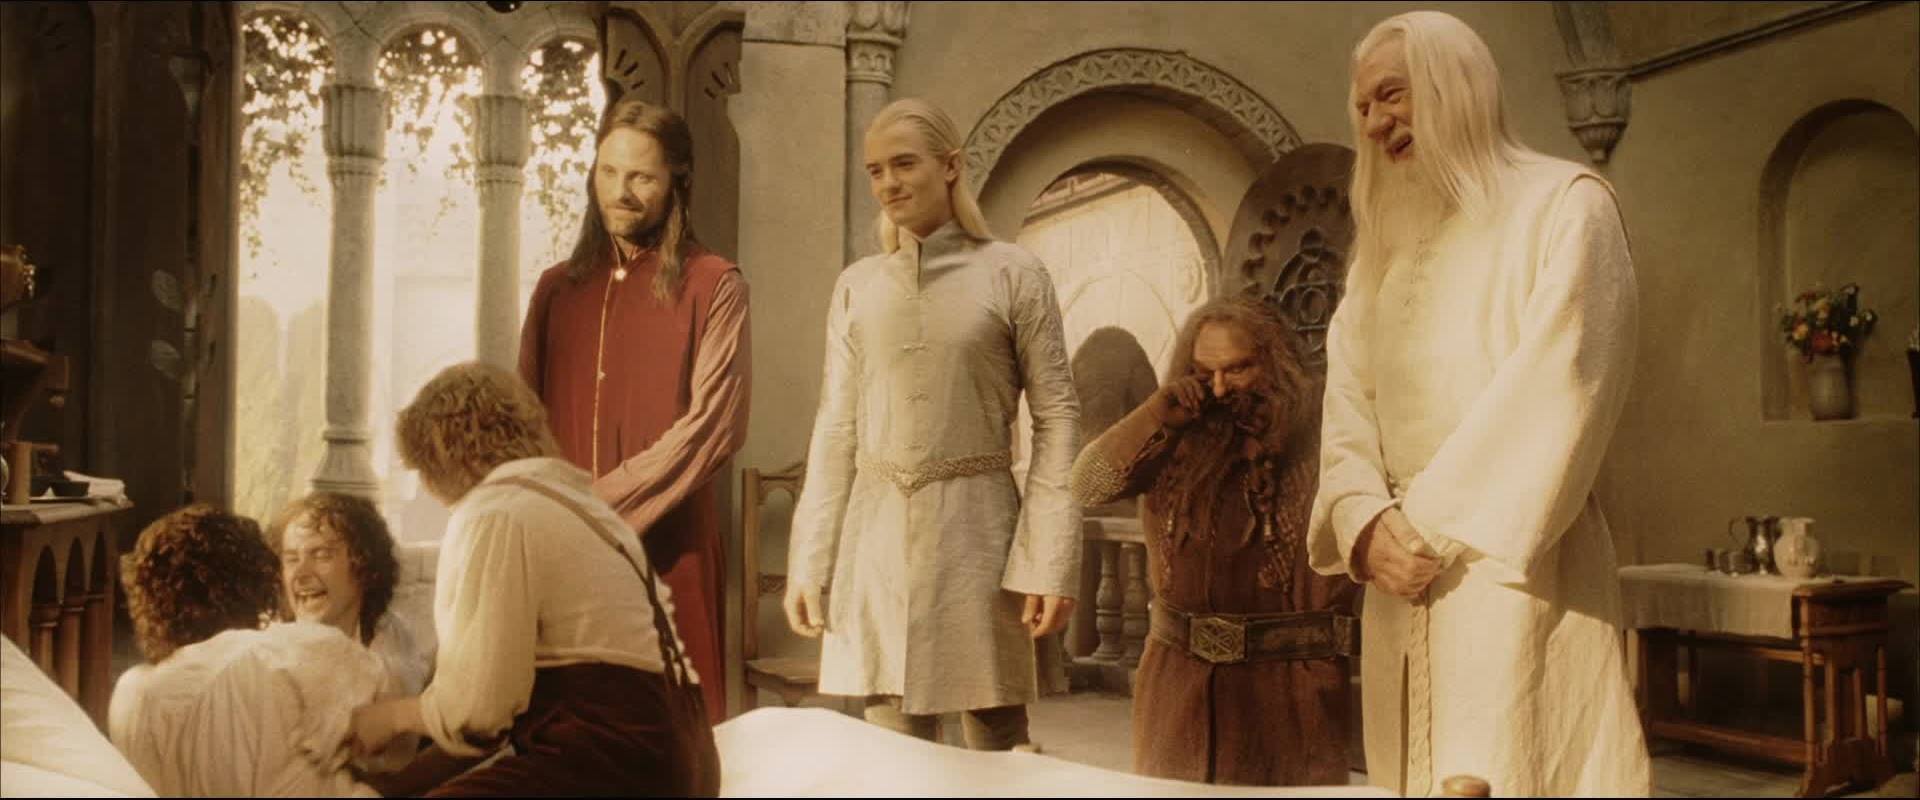 Elijah Wood, Viggo Mortensen, Ian McKellen, Orlando Bloom, Billy Boyd, Dominic Monaghan, and John Rhys-Davies in The Lord of the Rings: The Return of the King (2003)